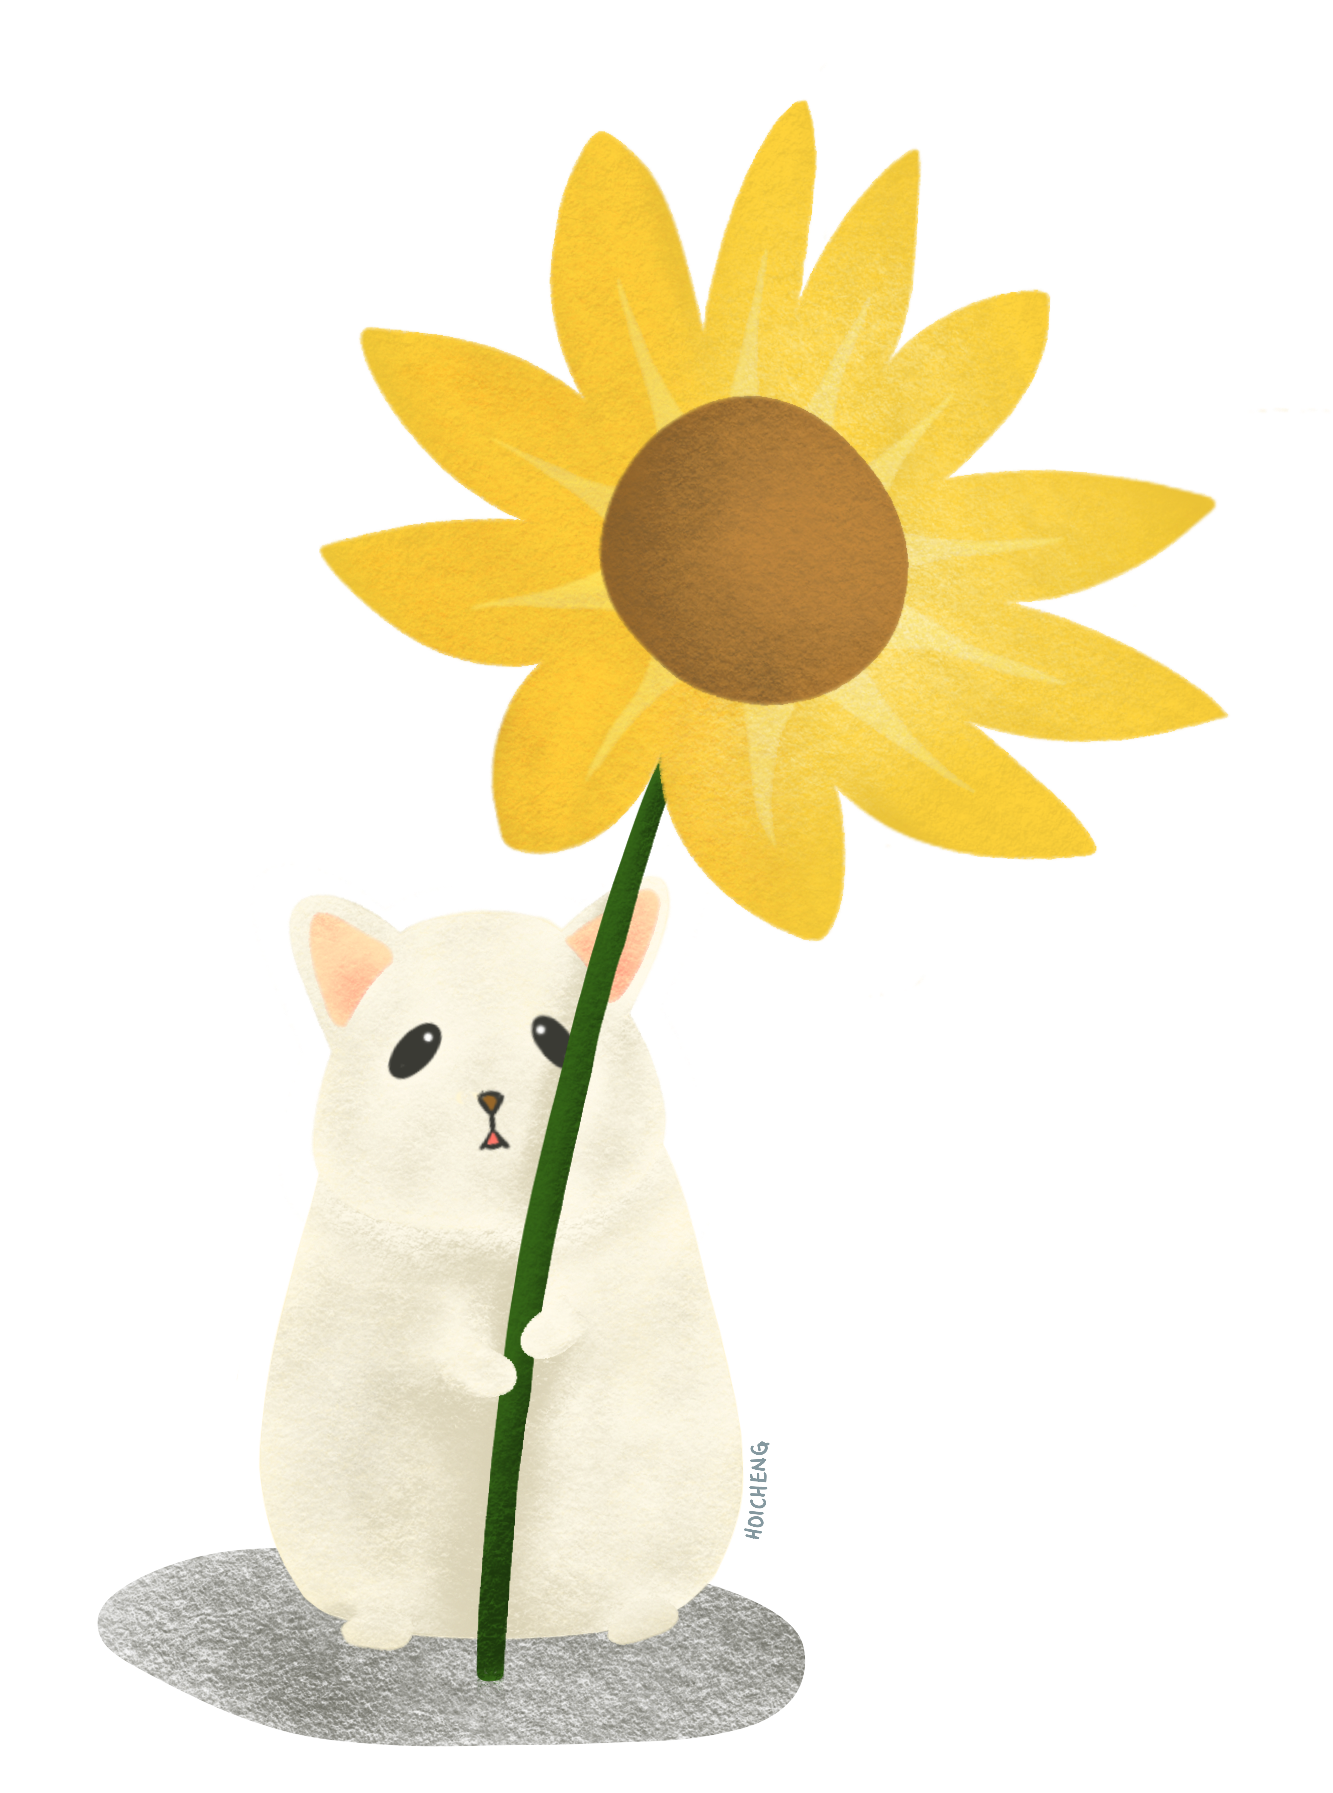 Rabbit holding sunflower